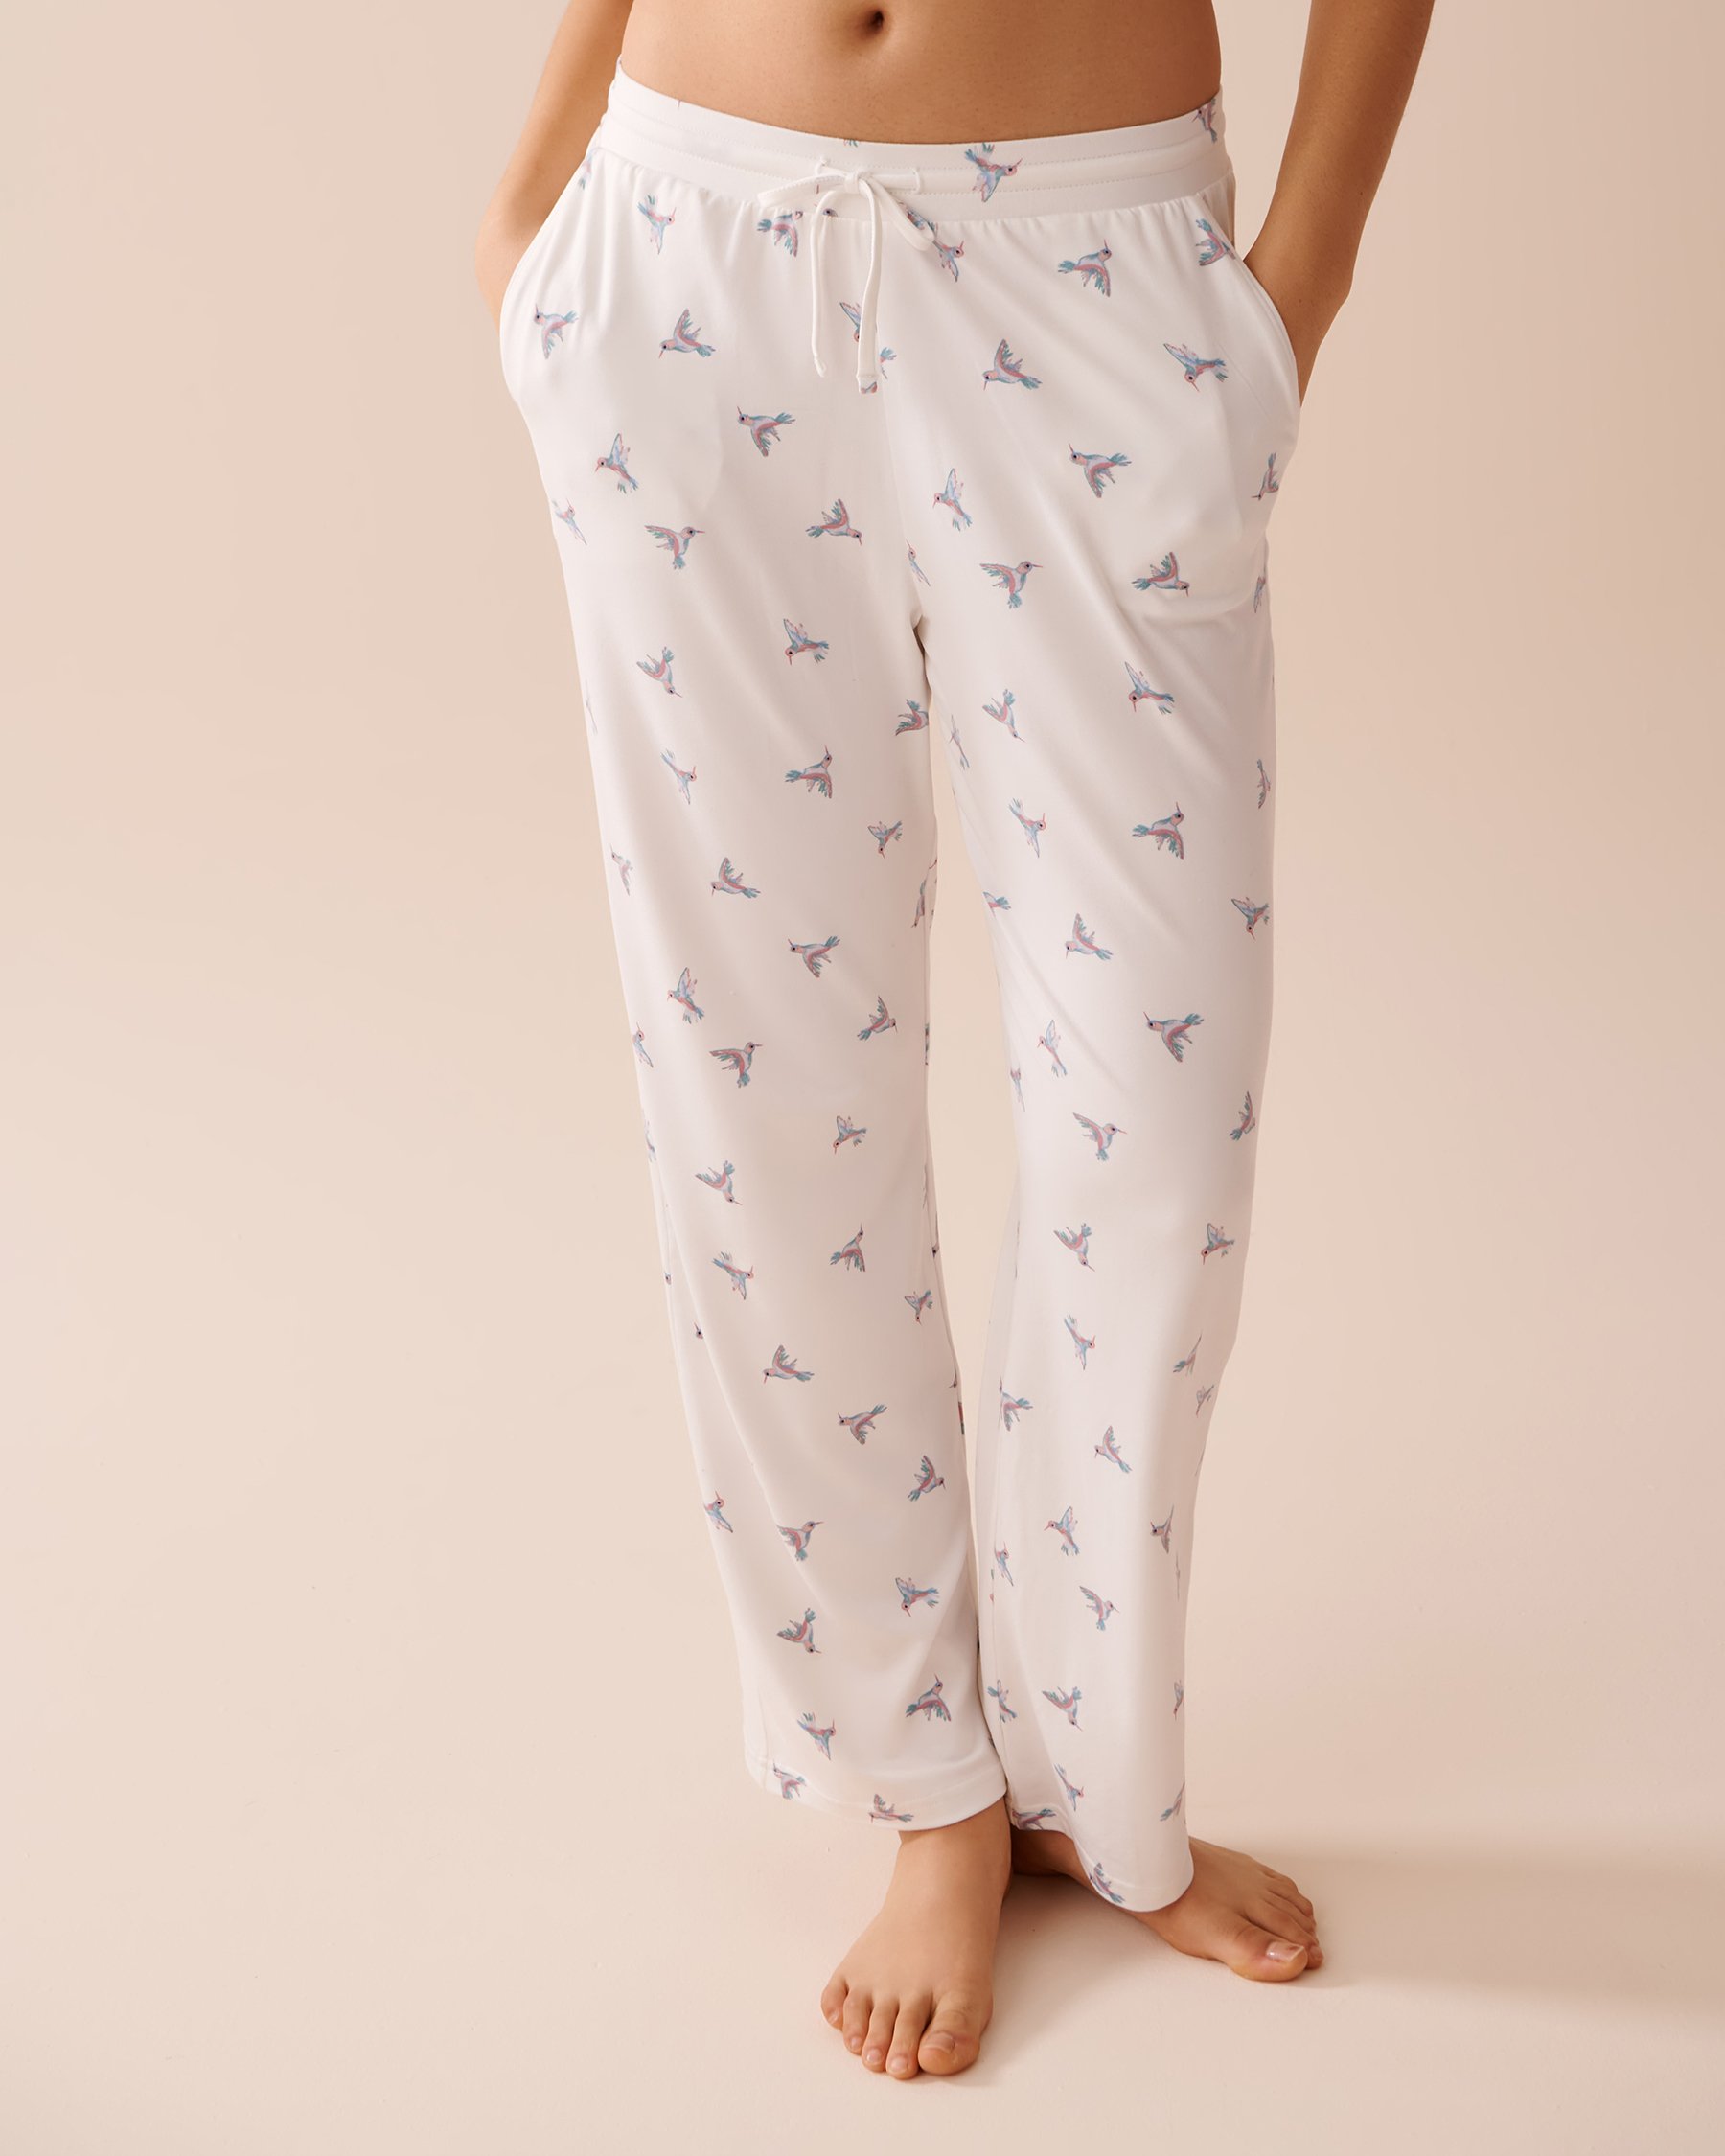 Women's pajamas, Explore our New Arrivals